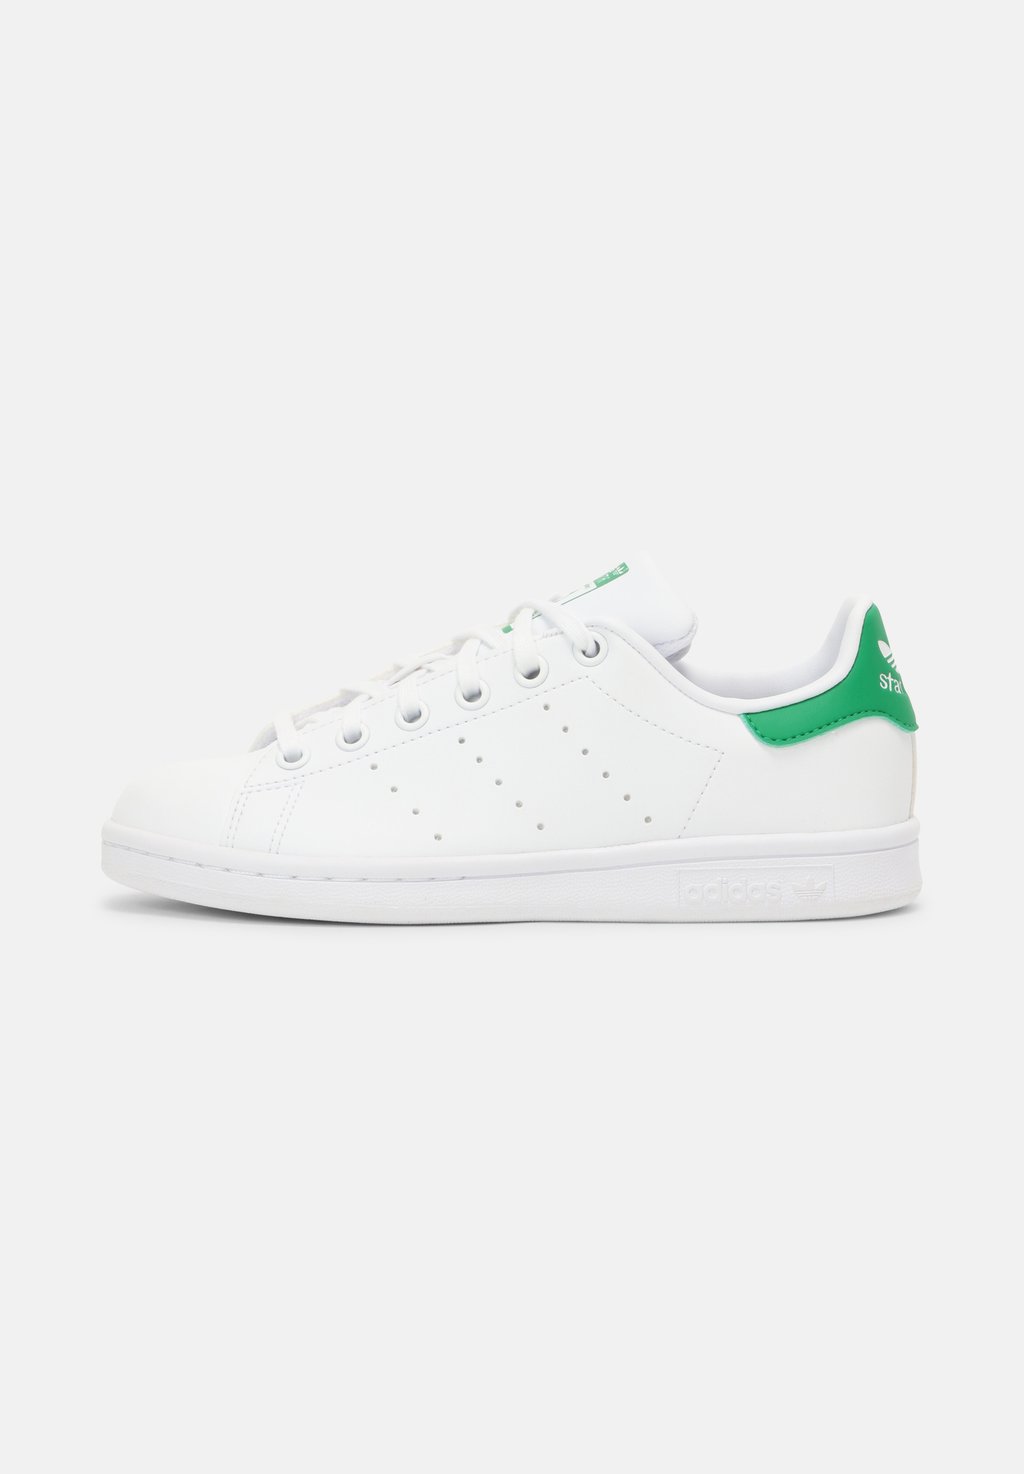 Низкие кроссовки Stan Smith Unisex adidas Originals, цвет white/green кроссовки adidas originals stan smith unisex white green